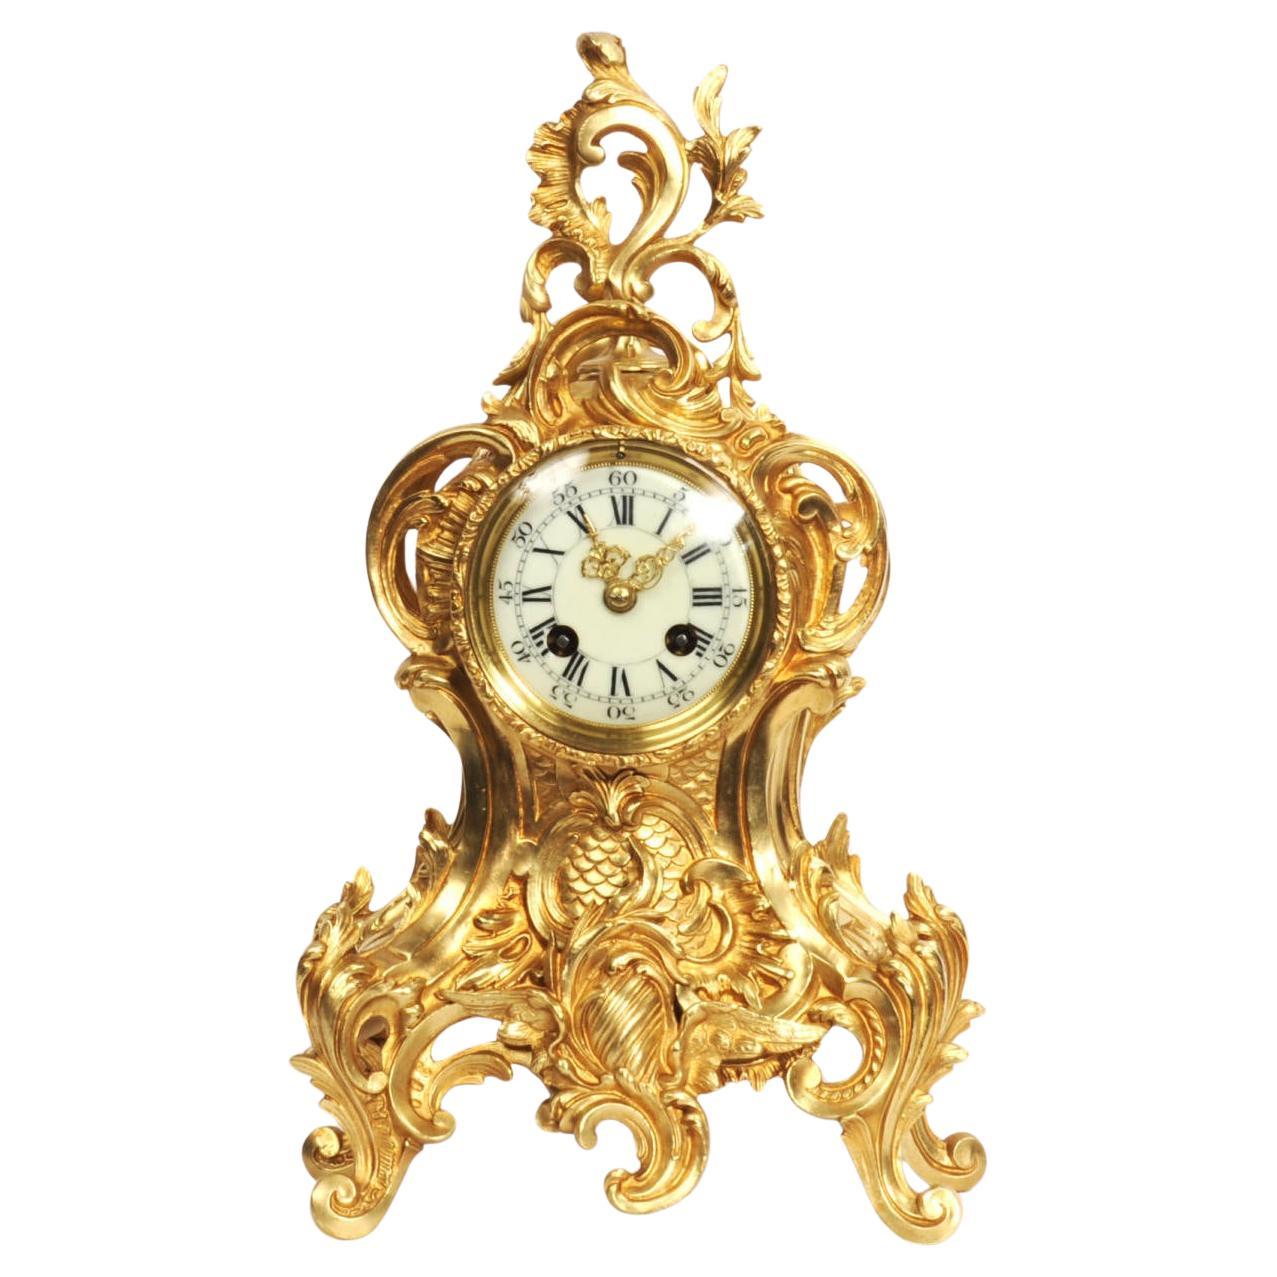 Antiguo Reloj French Rococo de Bronce Dorado